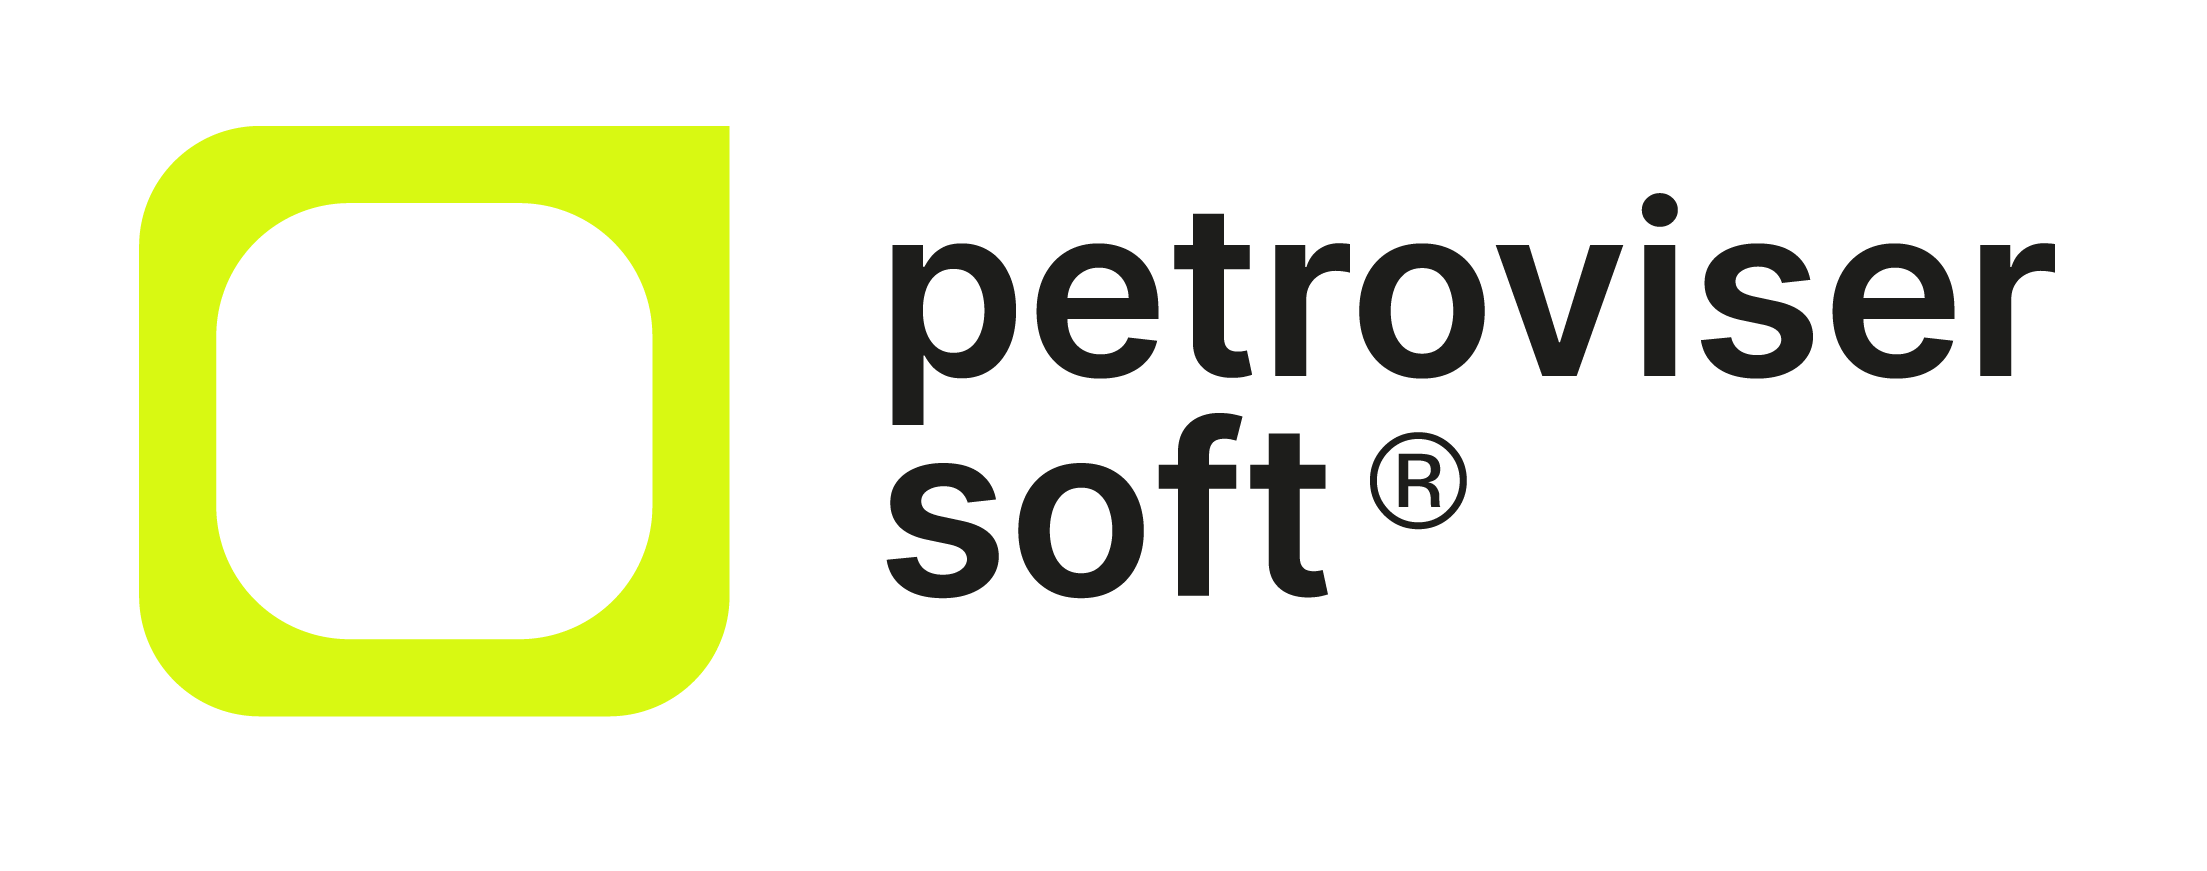 Petroviser Soft